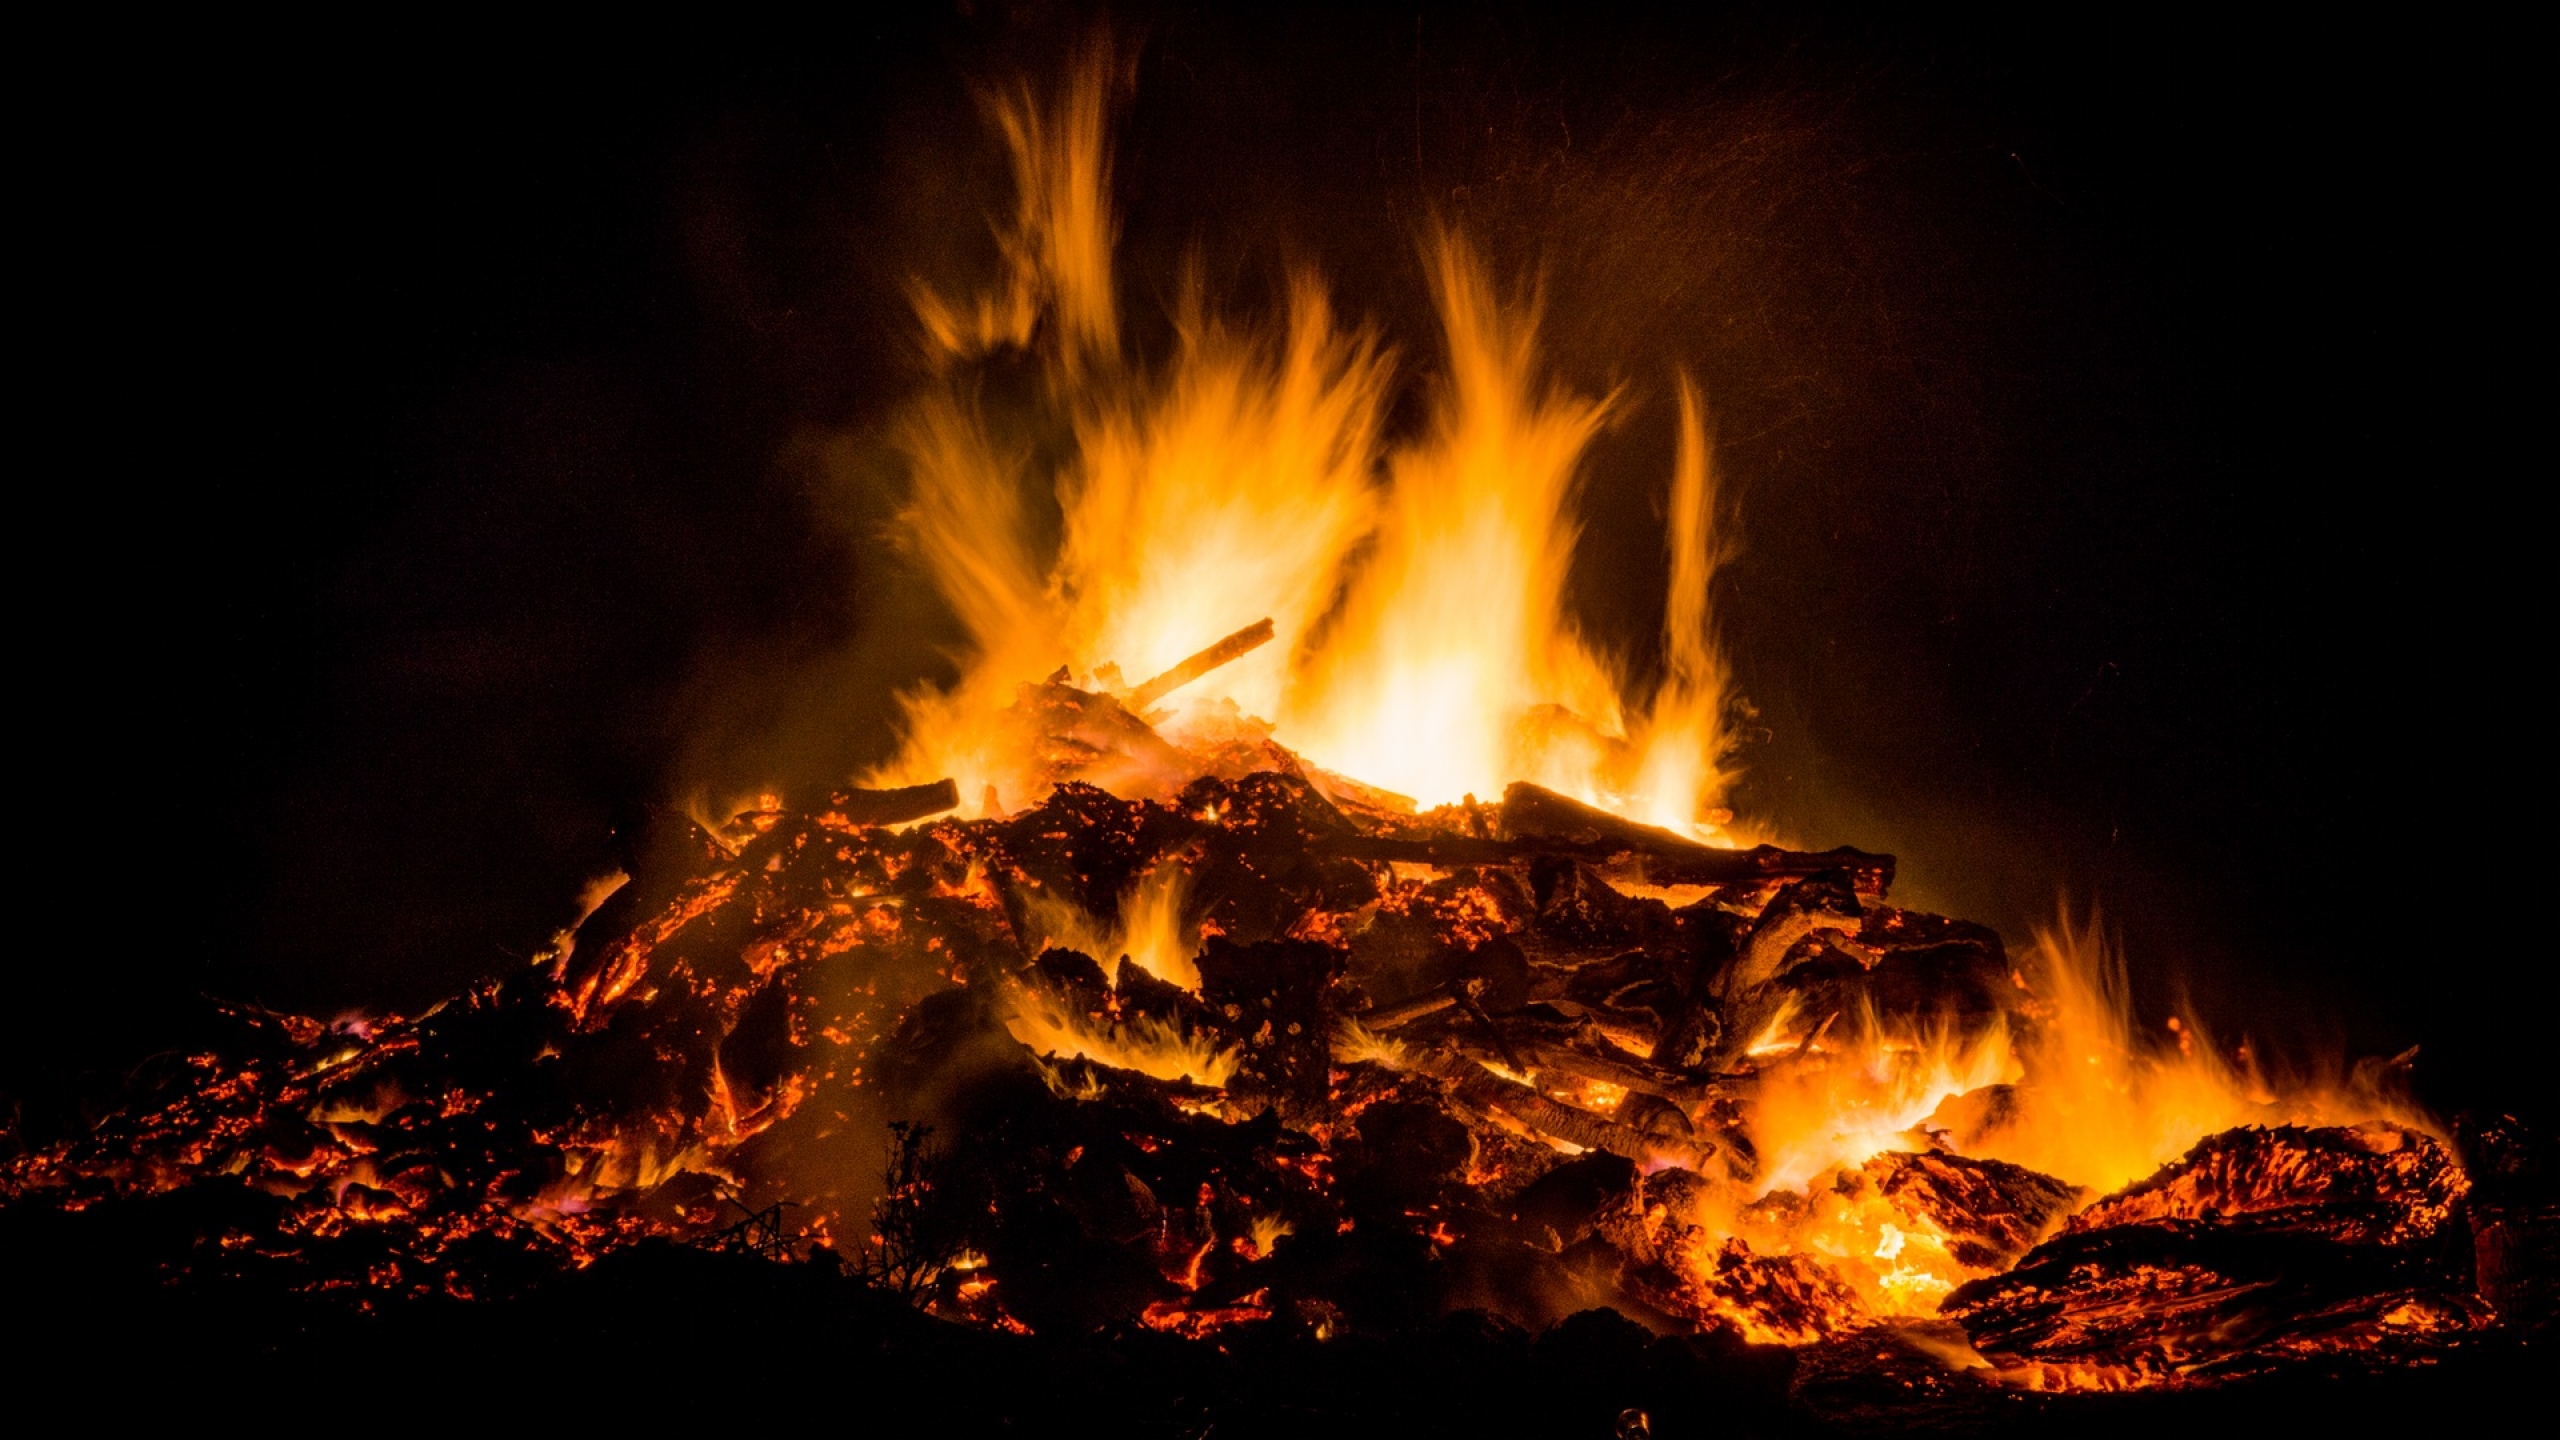 fire, photography, bonfire, log, night